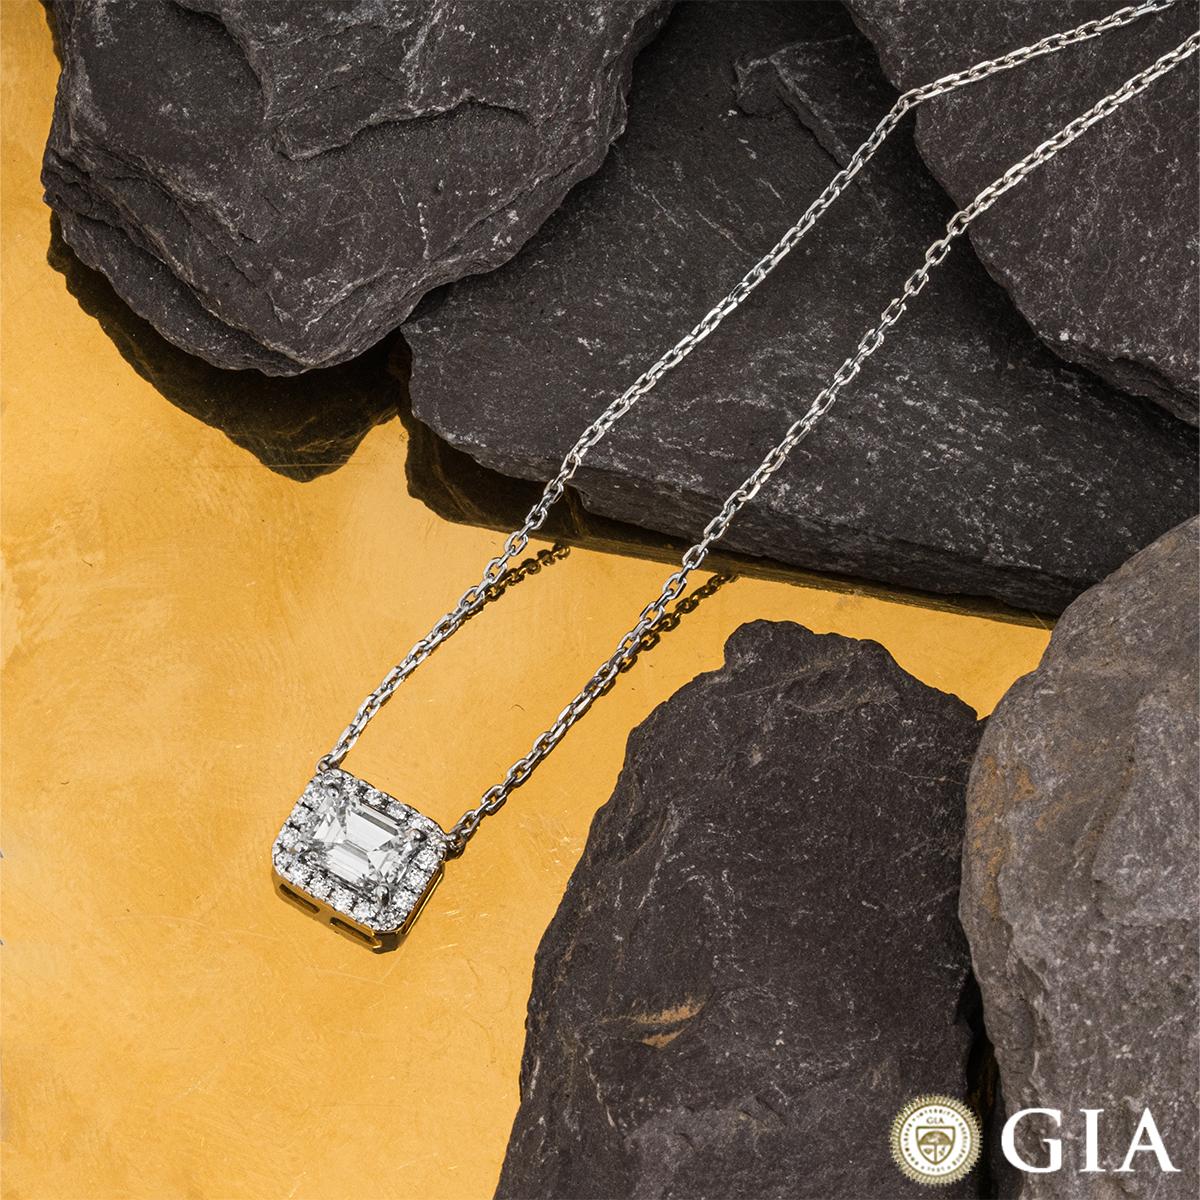 GIA Certified White Gold Emerald Cut Diamond Pendant 0.51 Carat F/VS1 For Sale 4